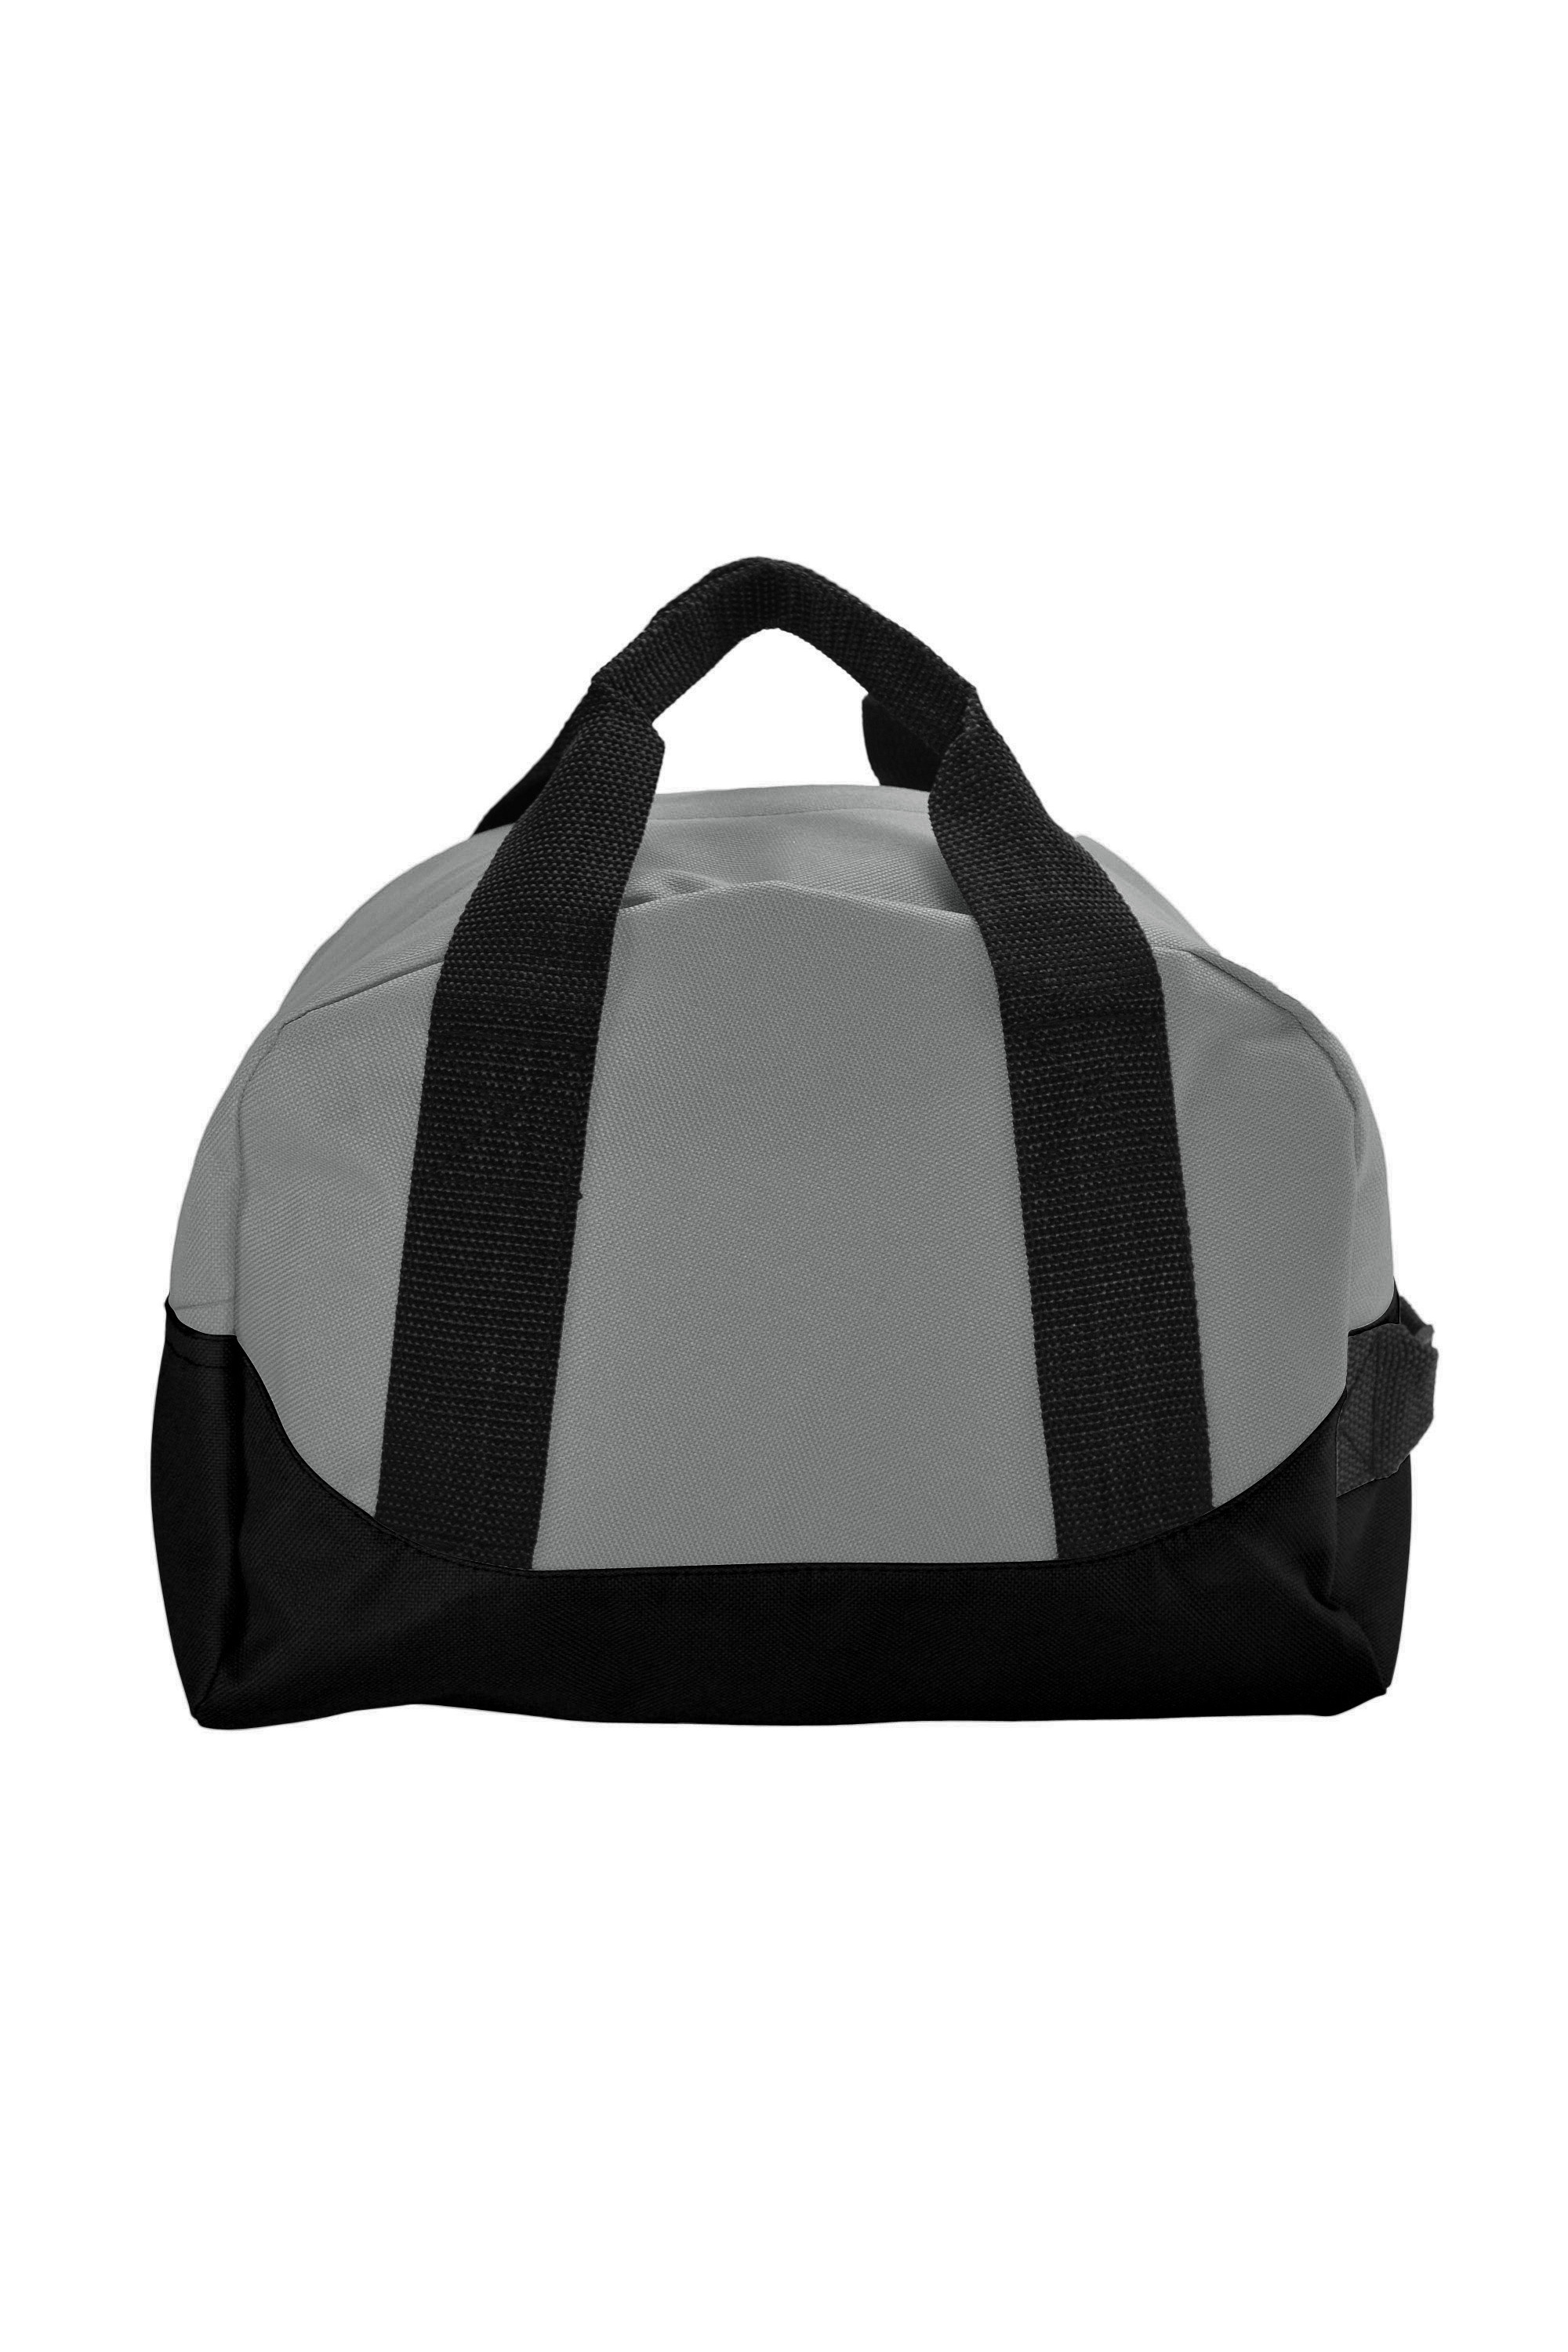 DALIX 12" Mini Duffel Bag Gym Duffle in Gray - image 4 of 8